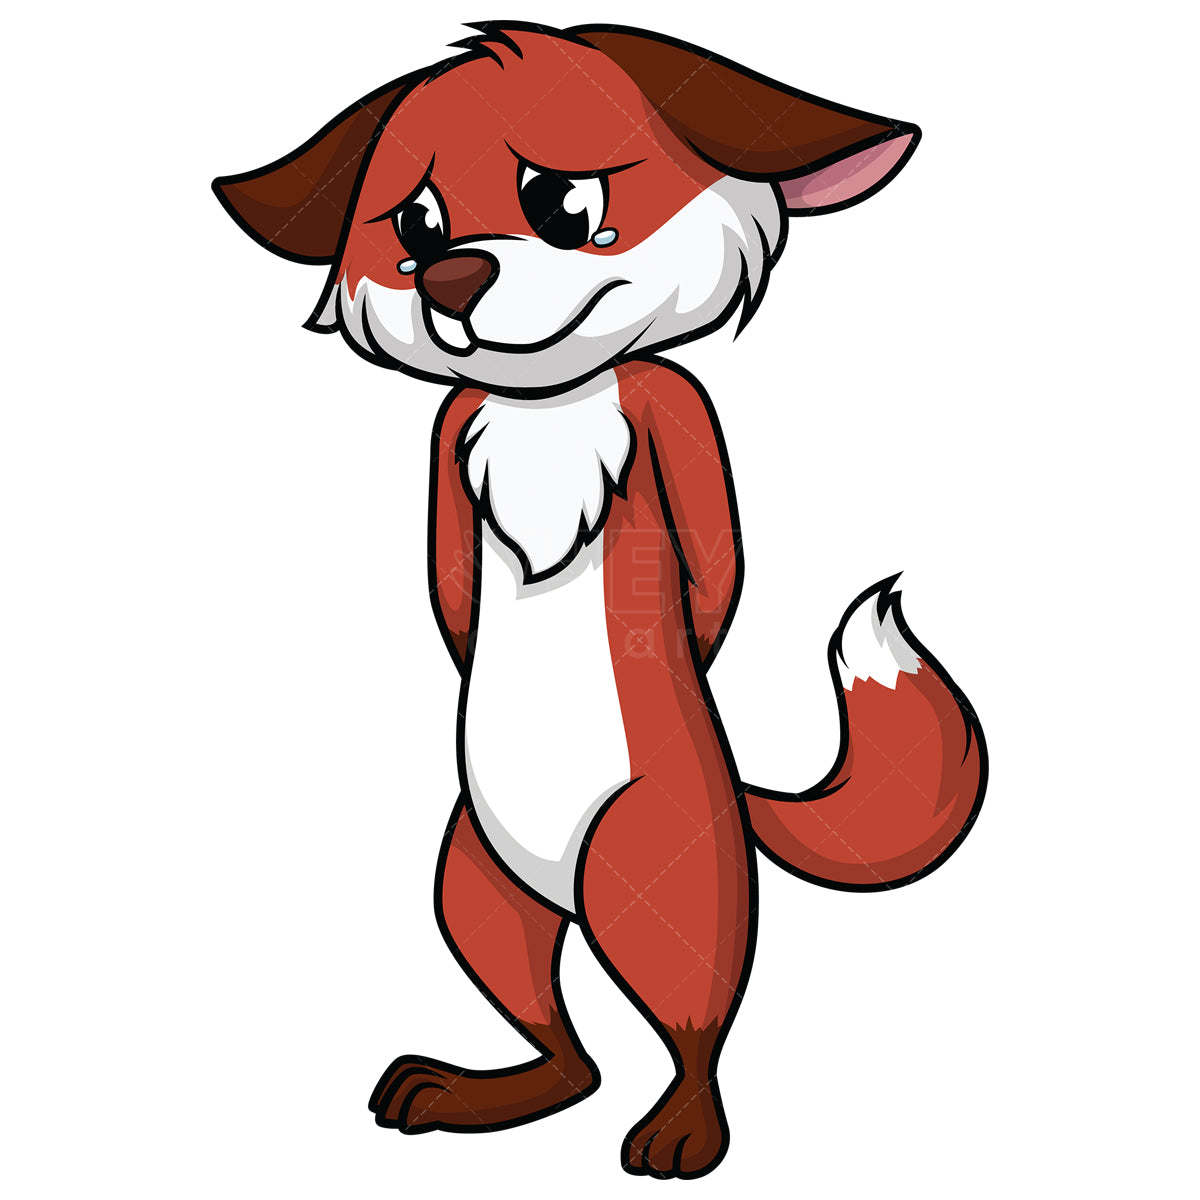 Royalty-free stock vector illustration of a sad fox.